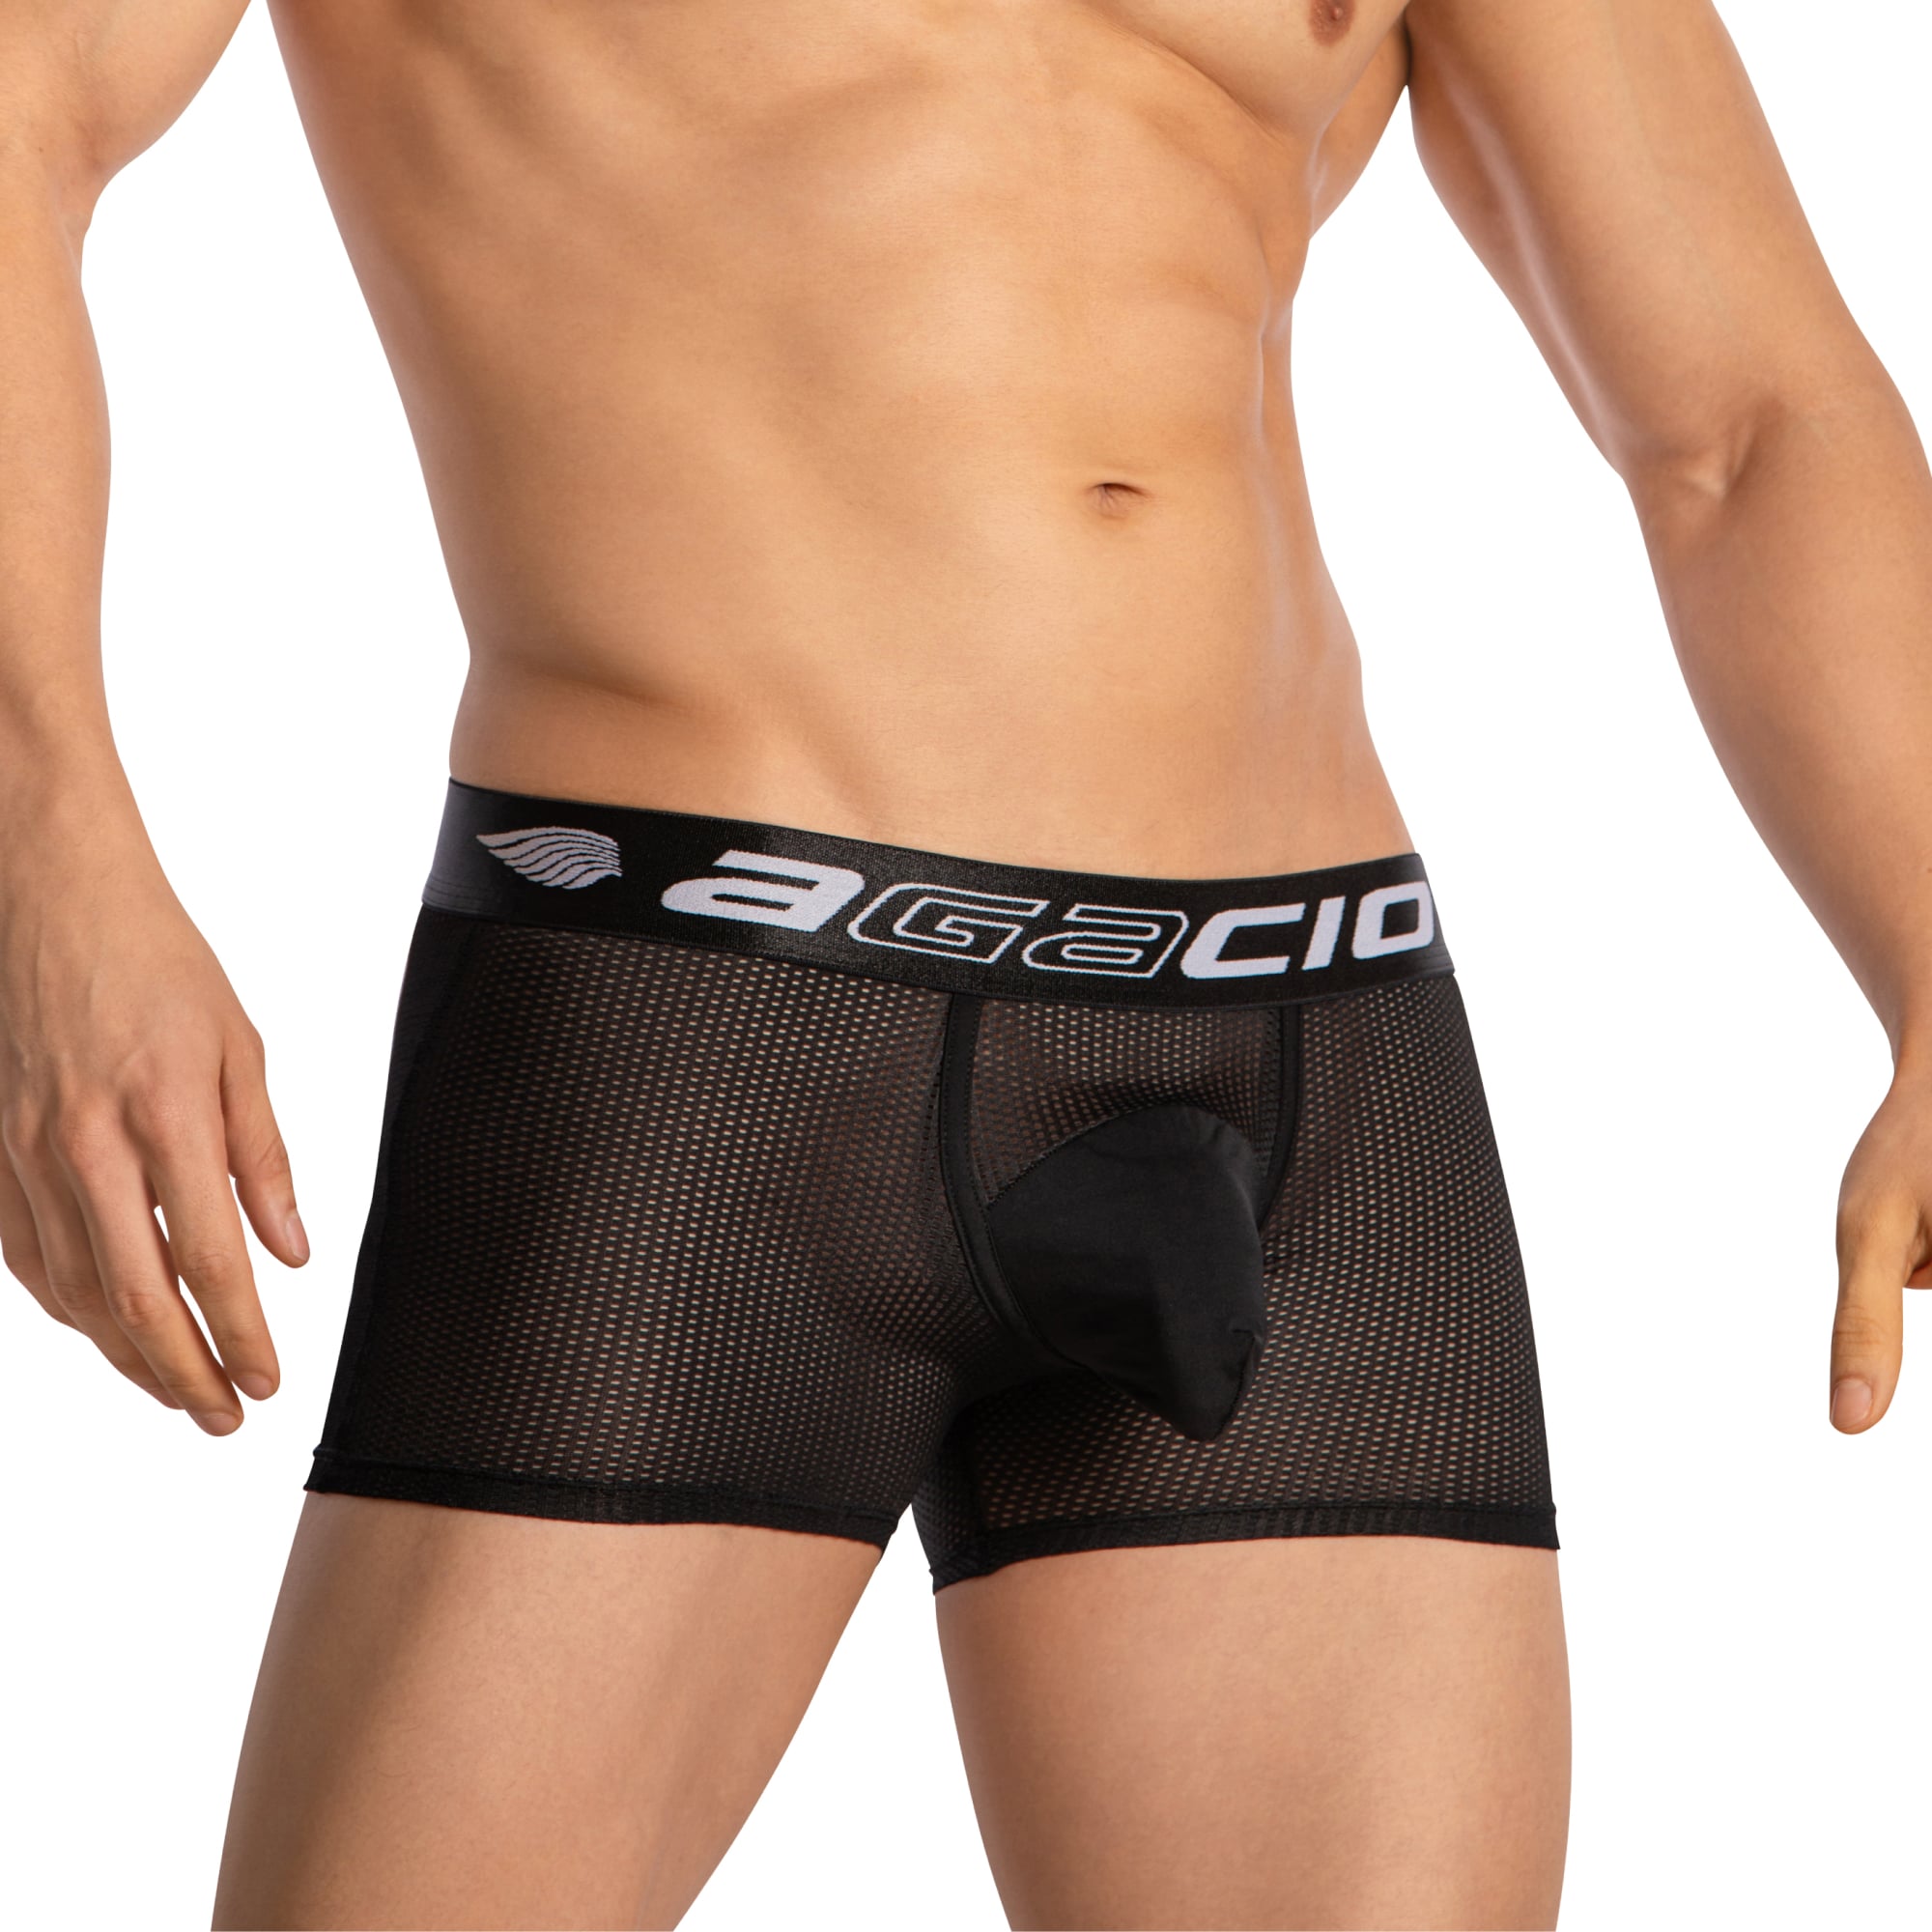 Agacio Boxer Mesh Trunks with Pouch AGG085 Sexy Men's Underwear Choice